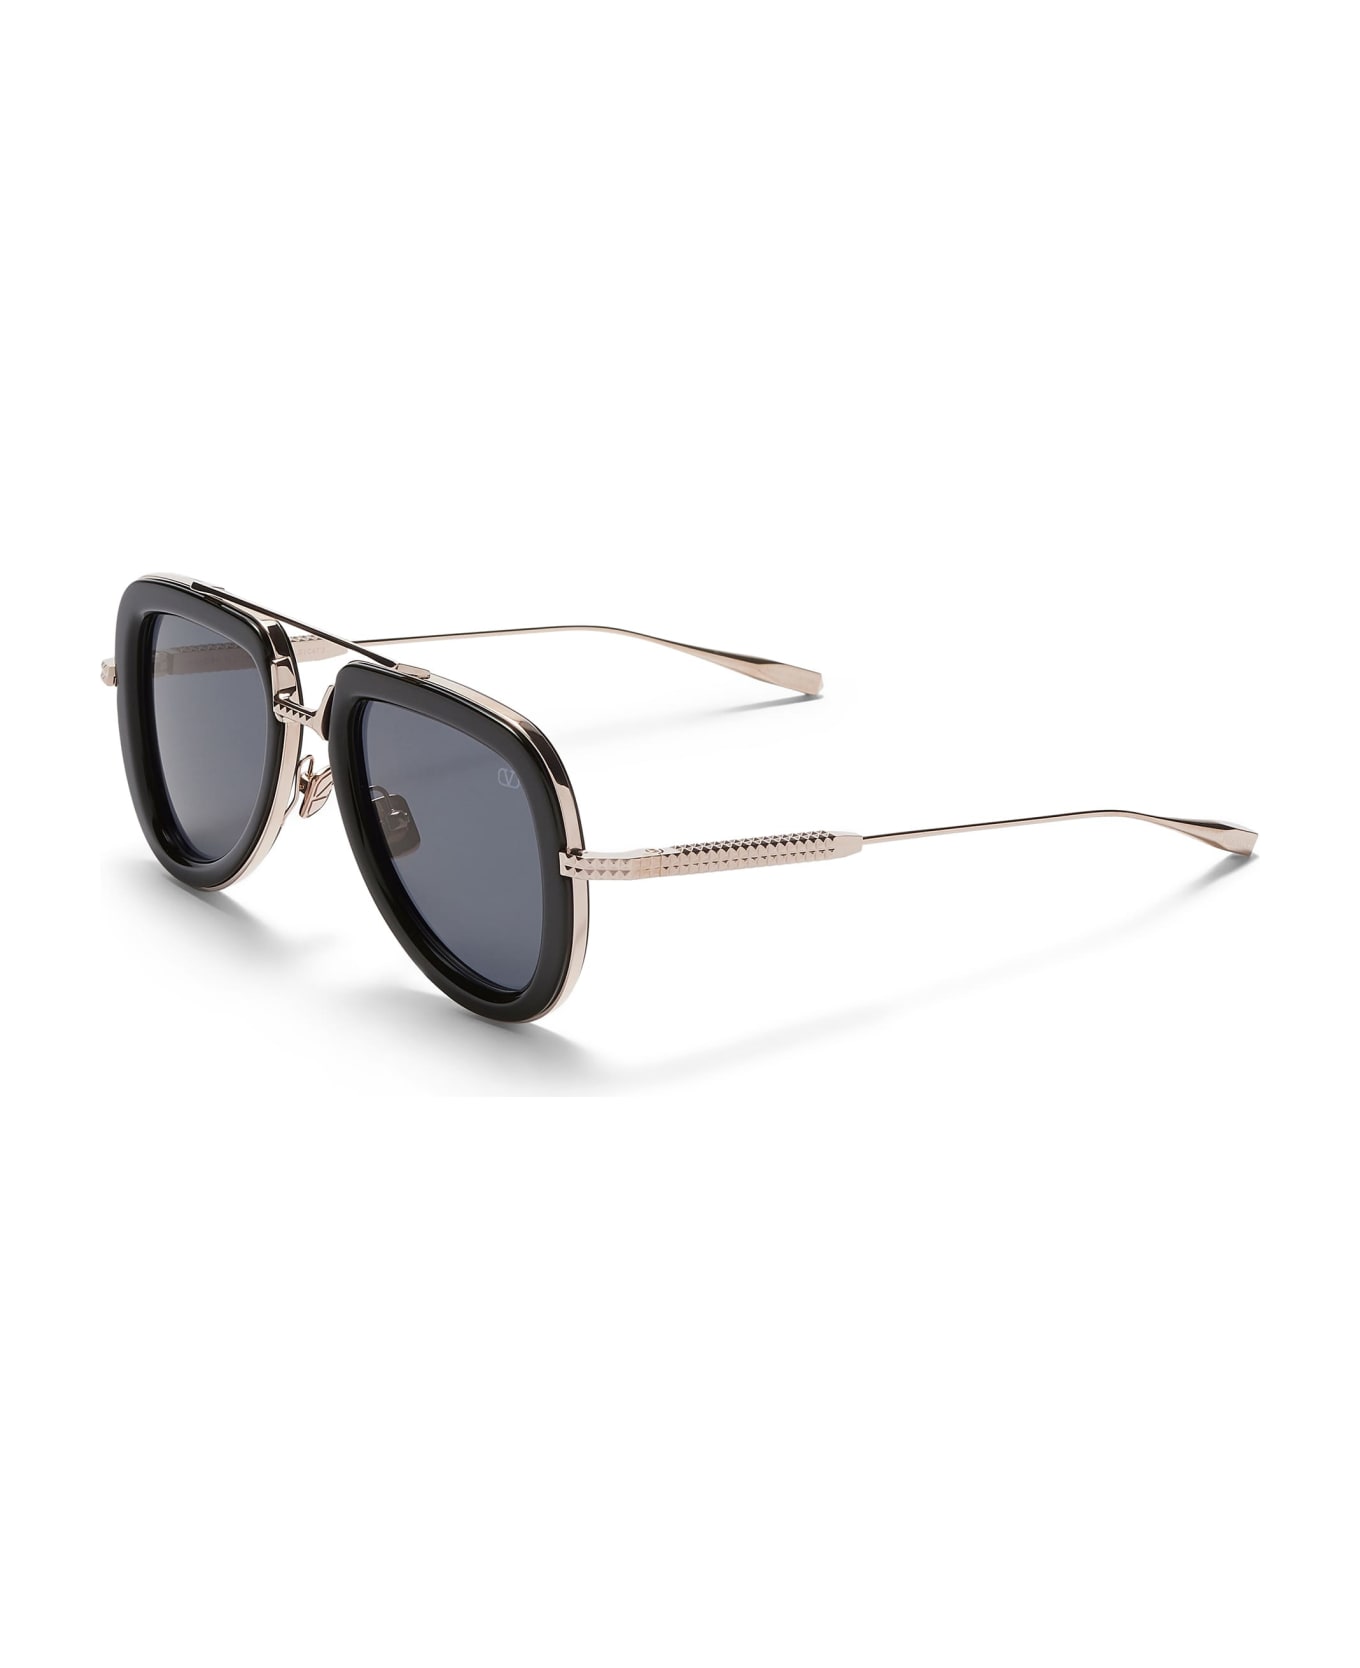 Valentino Eyewear V-lstory - Black / White Gold Sunglasses - white gold